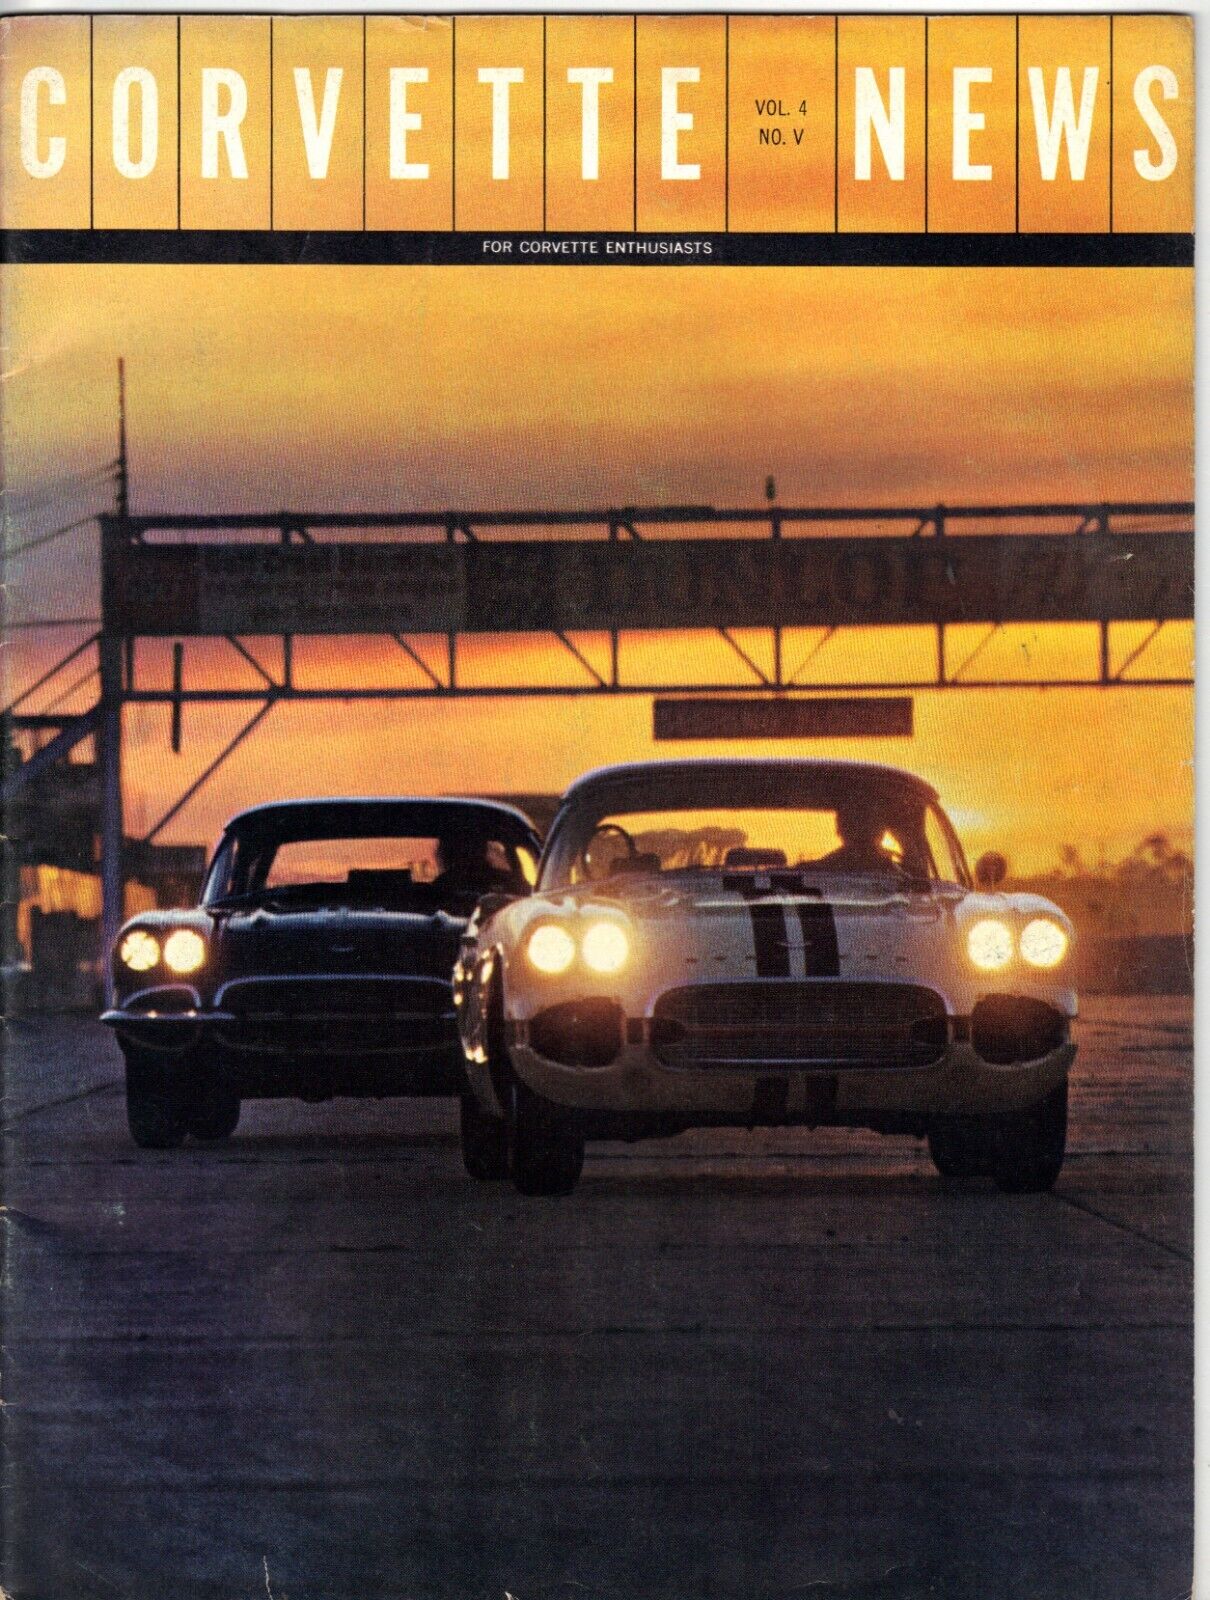 Lot of 7 1960's - 1970's Corvette News Magazines